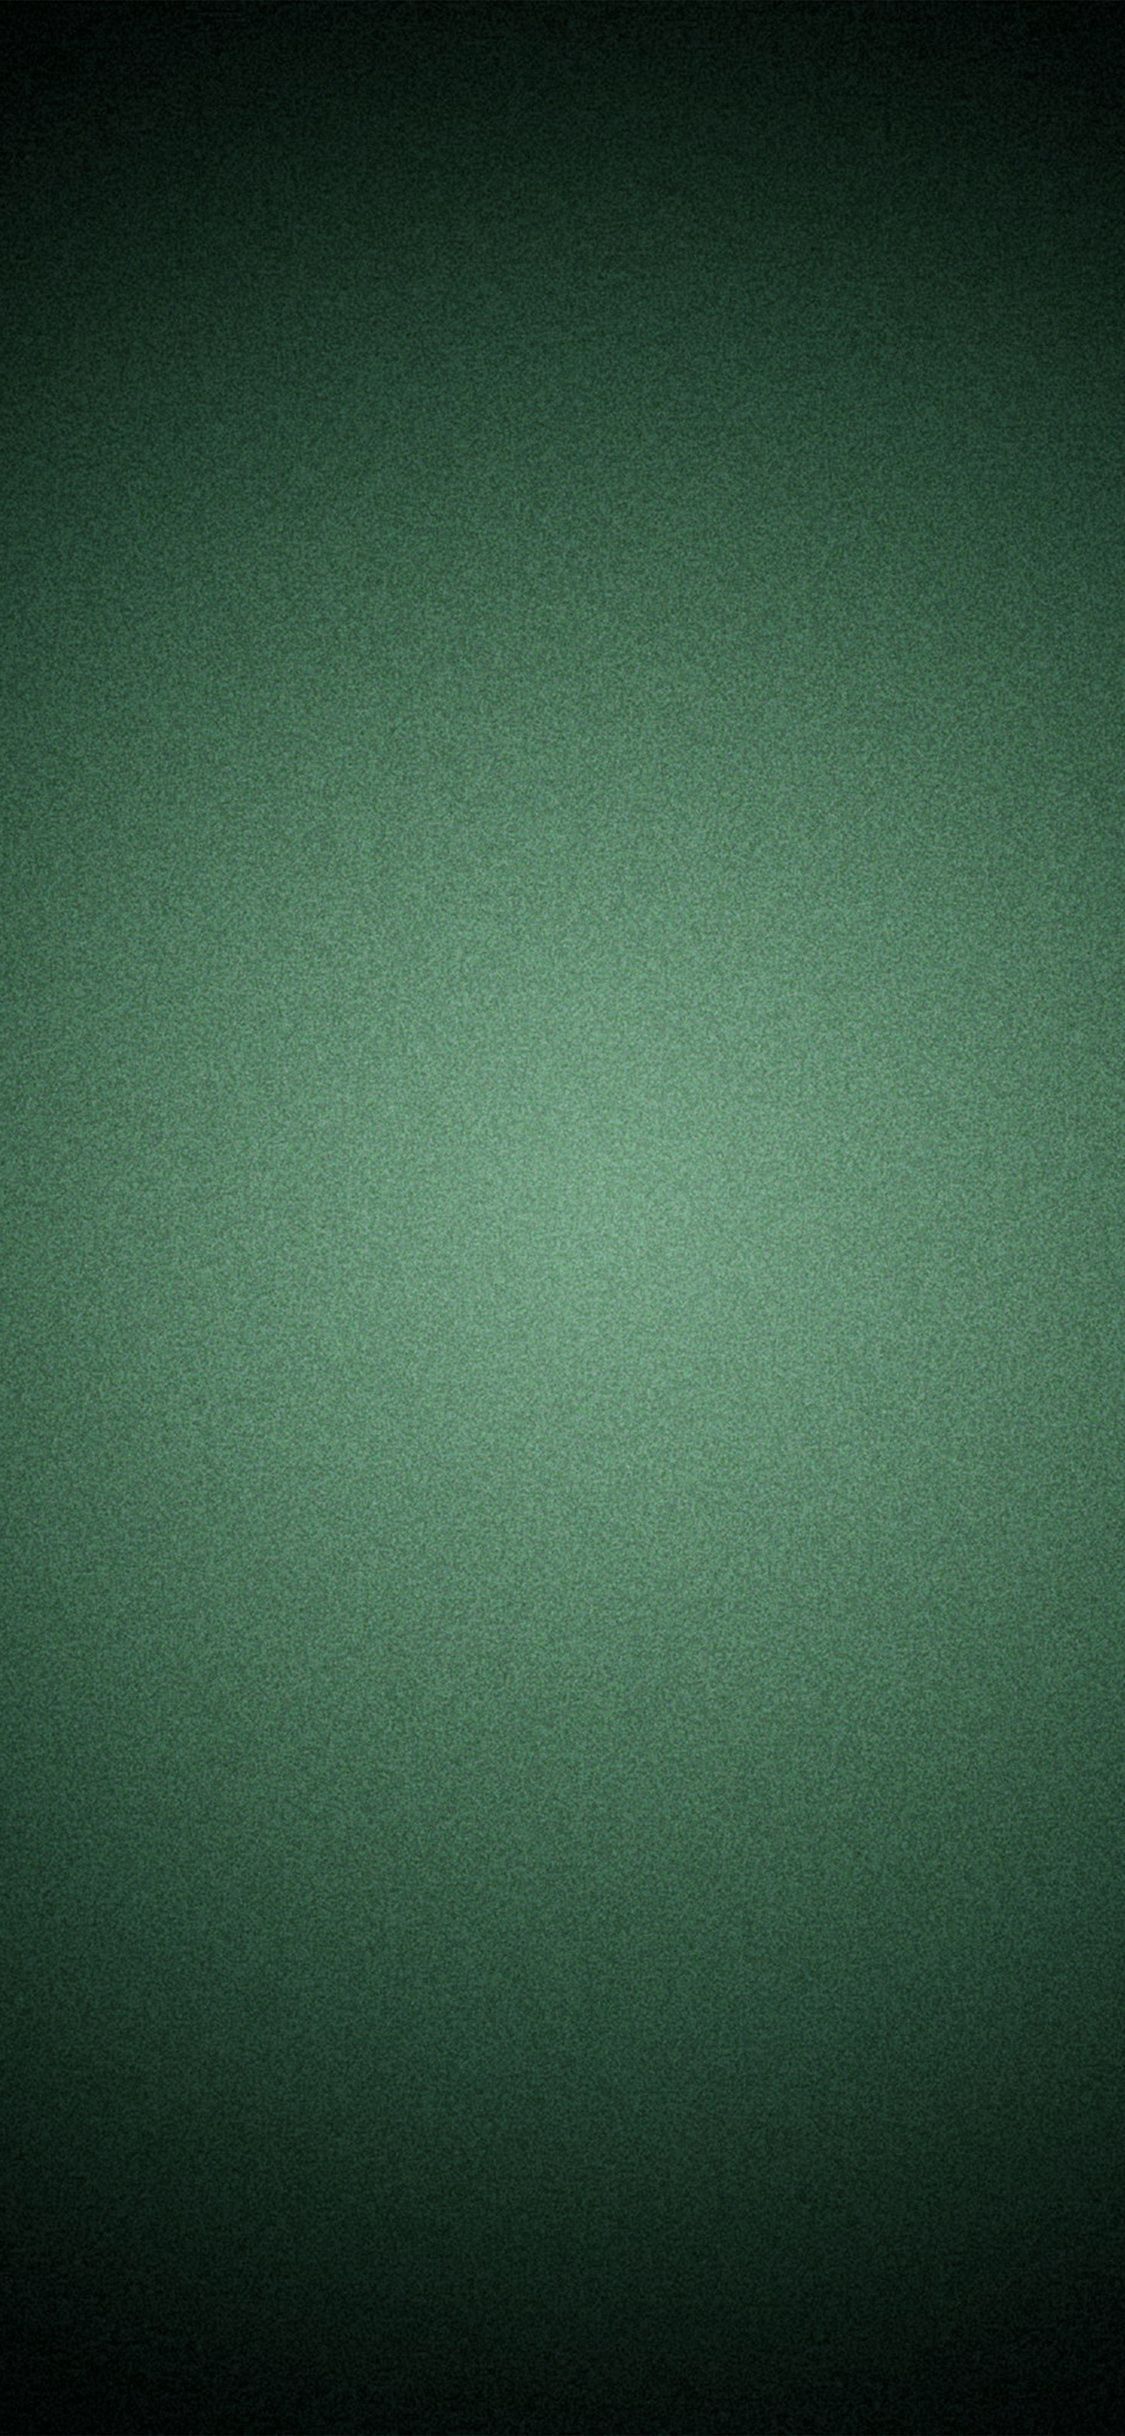 Circle Vignette Dark Green Pattern Via For IPhone X. Dark Green Wallpaper, Green Wallpaper, Apple Wallpaper